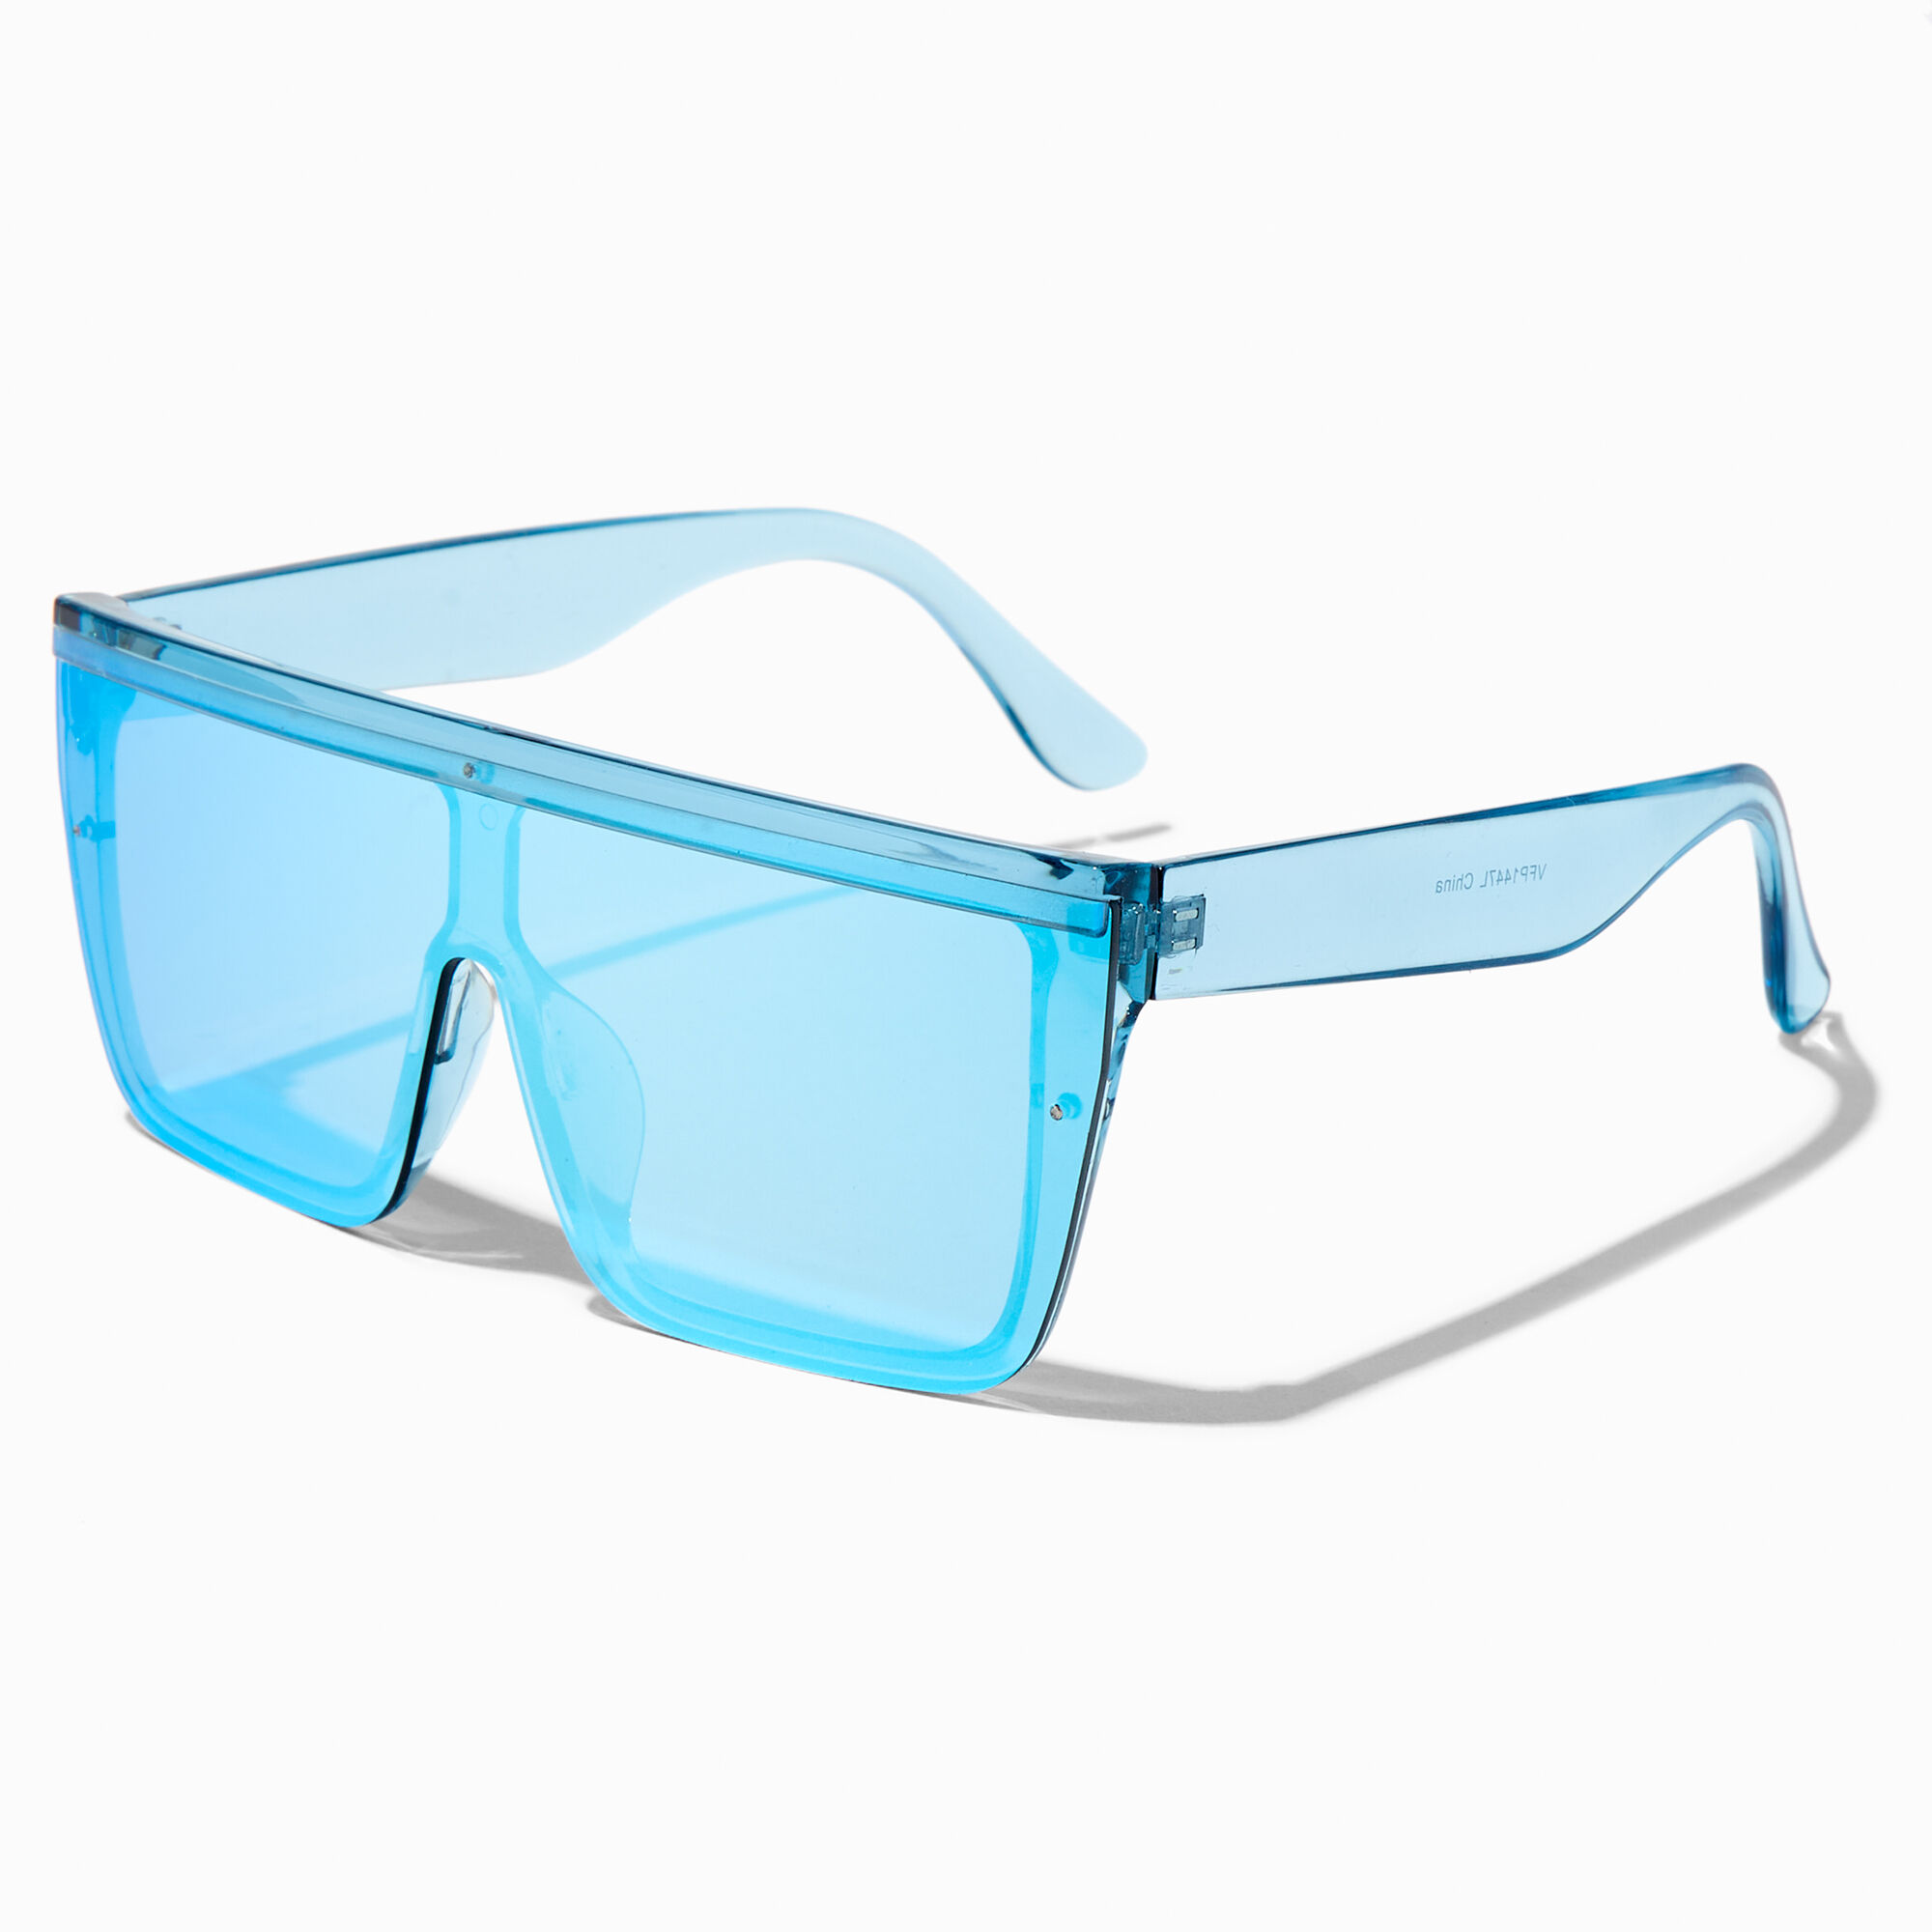 View Claires Translucent Shield Sunglasses Blue information